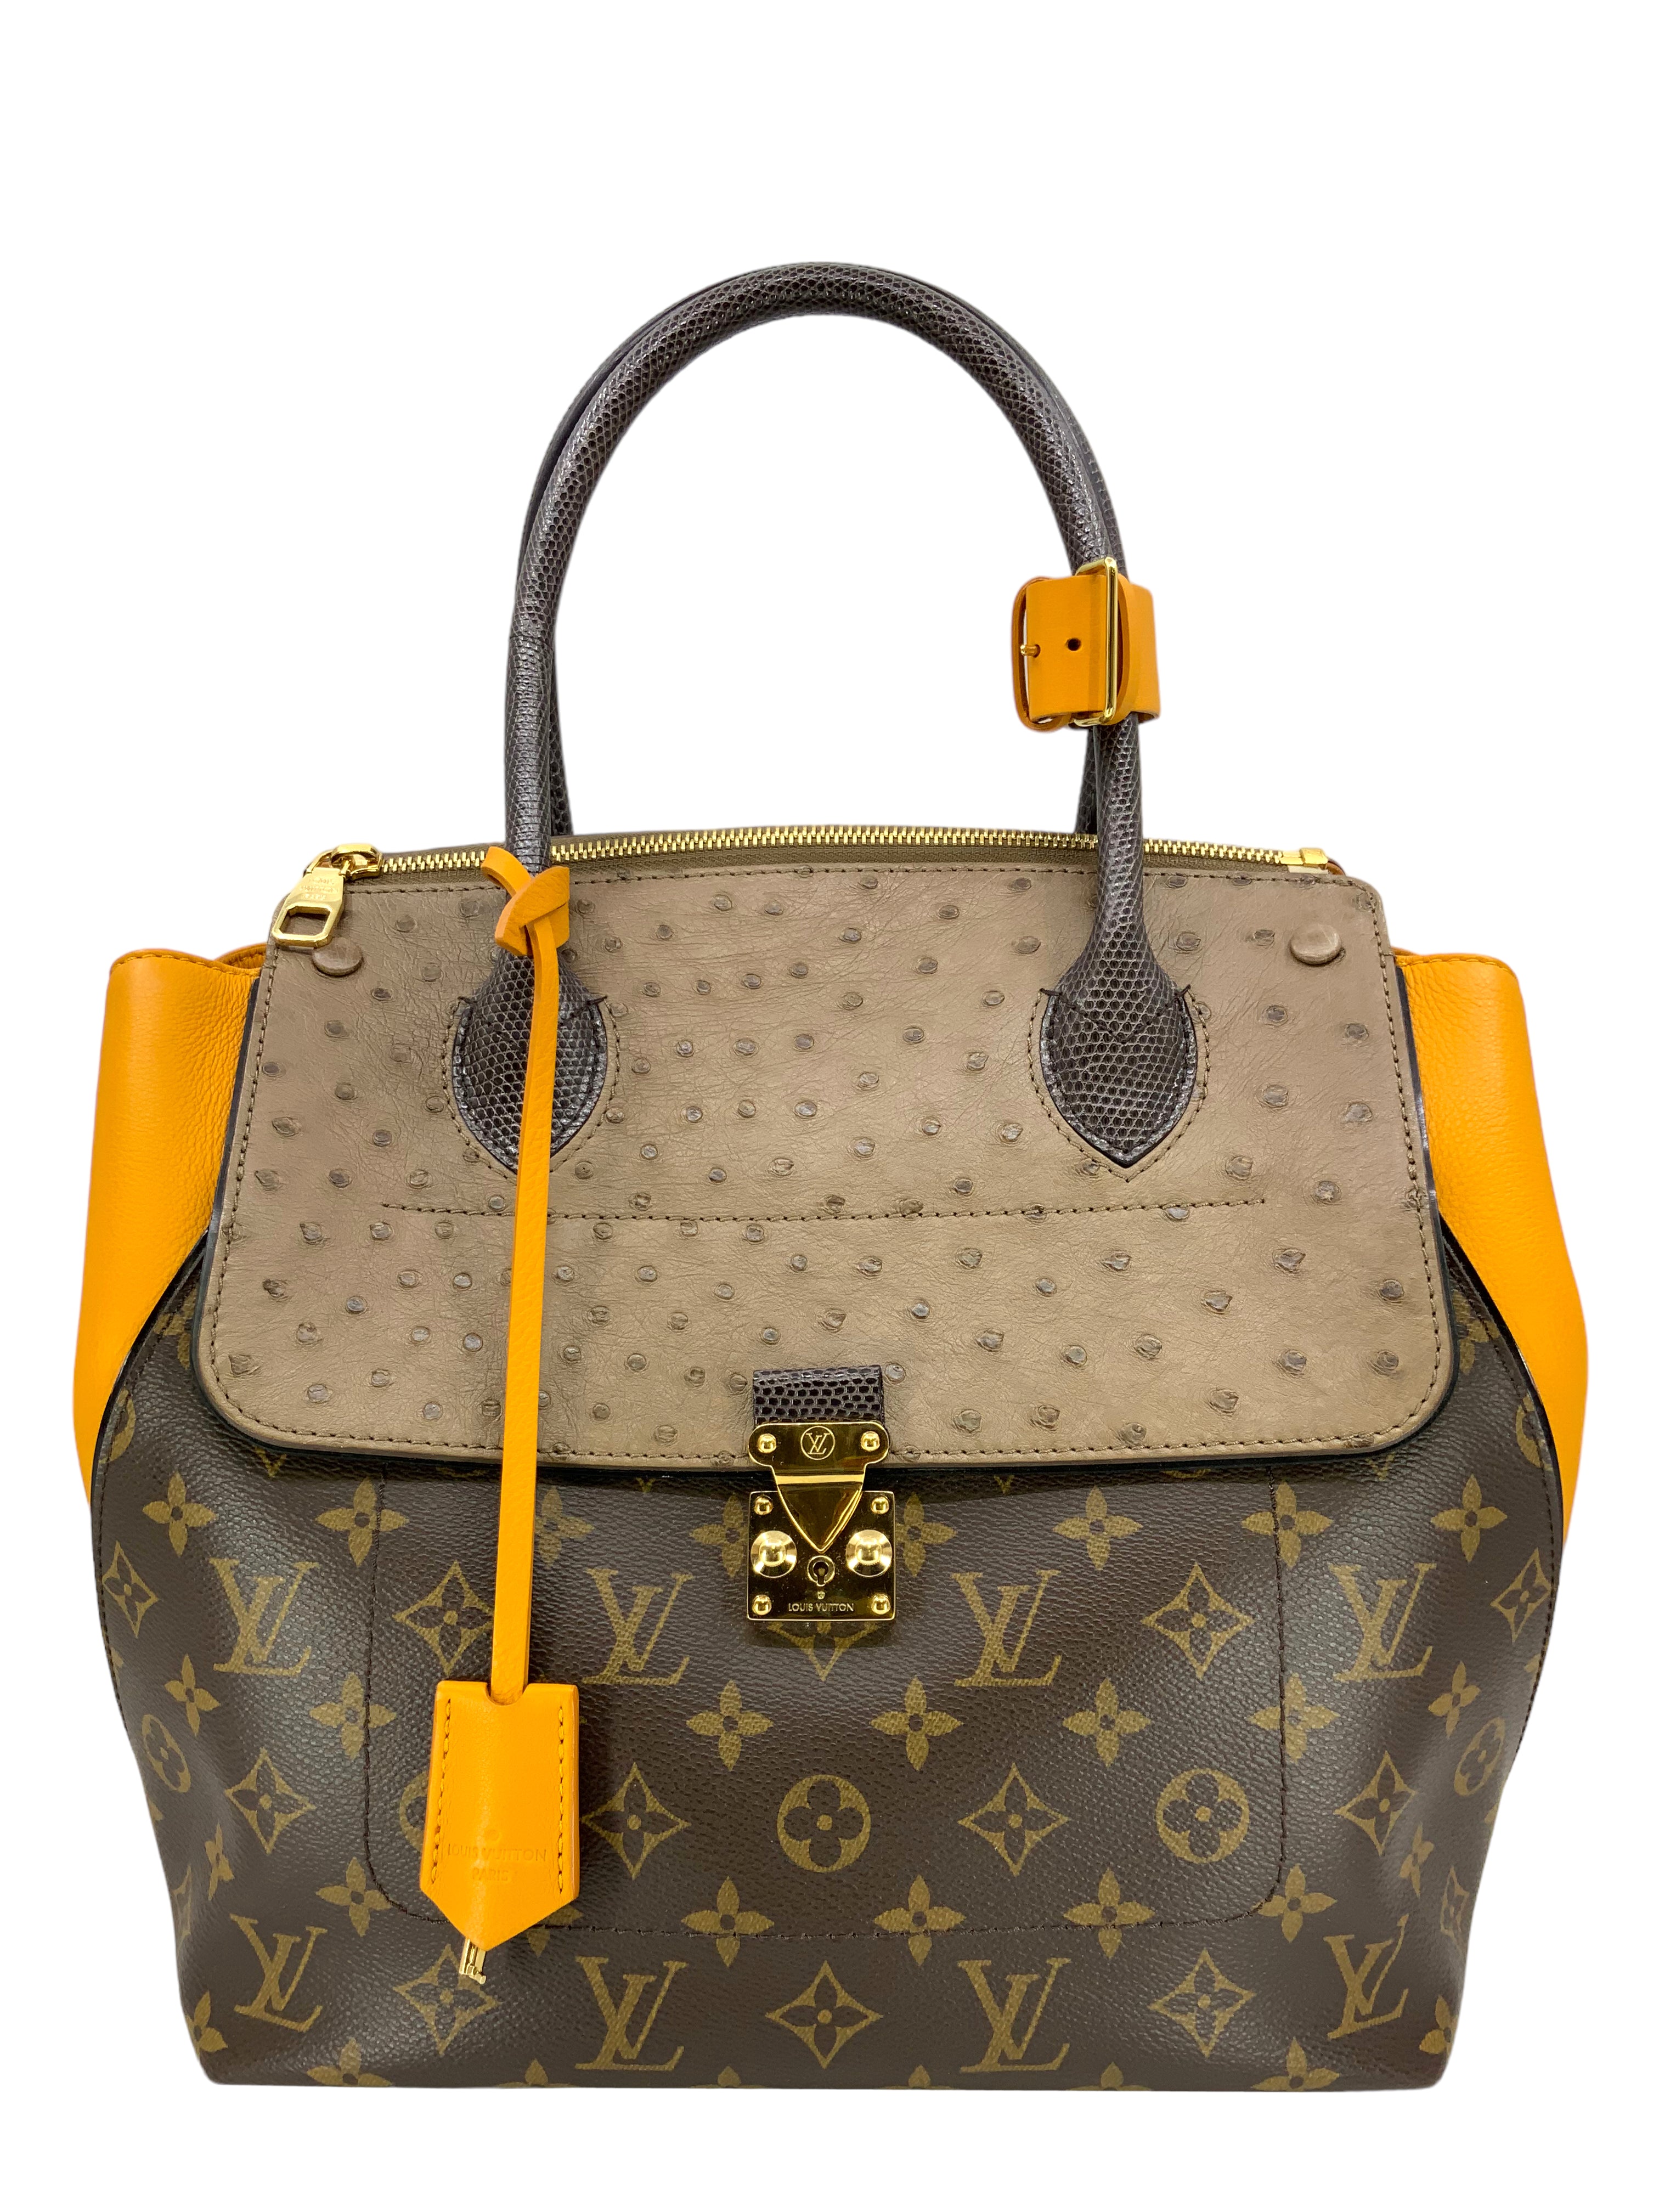 Louis Vuitton Limited Edition Handbag